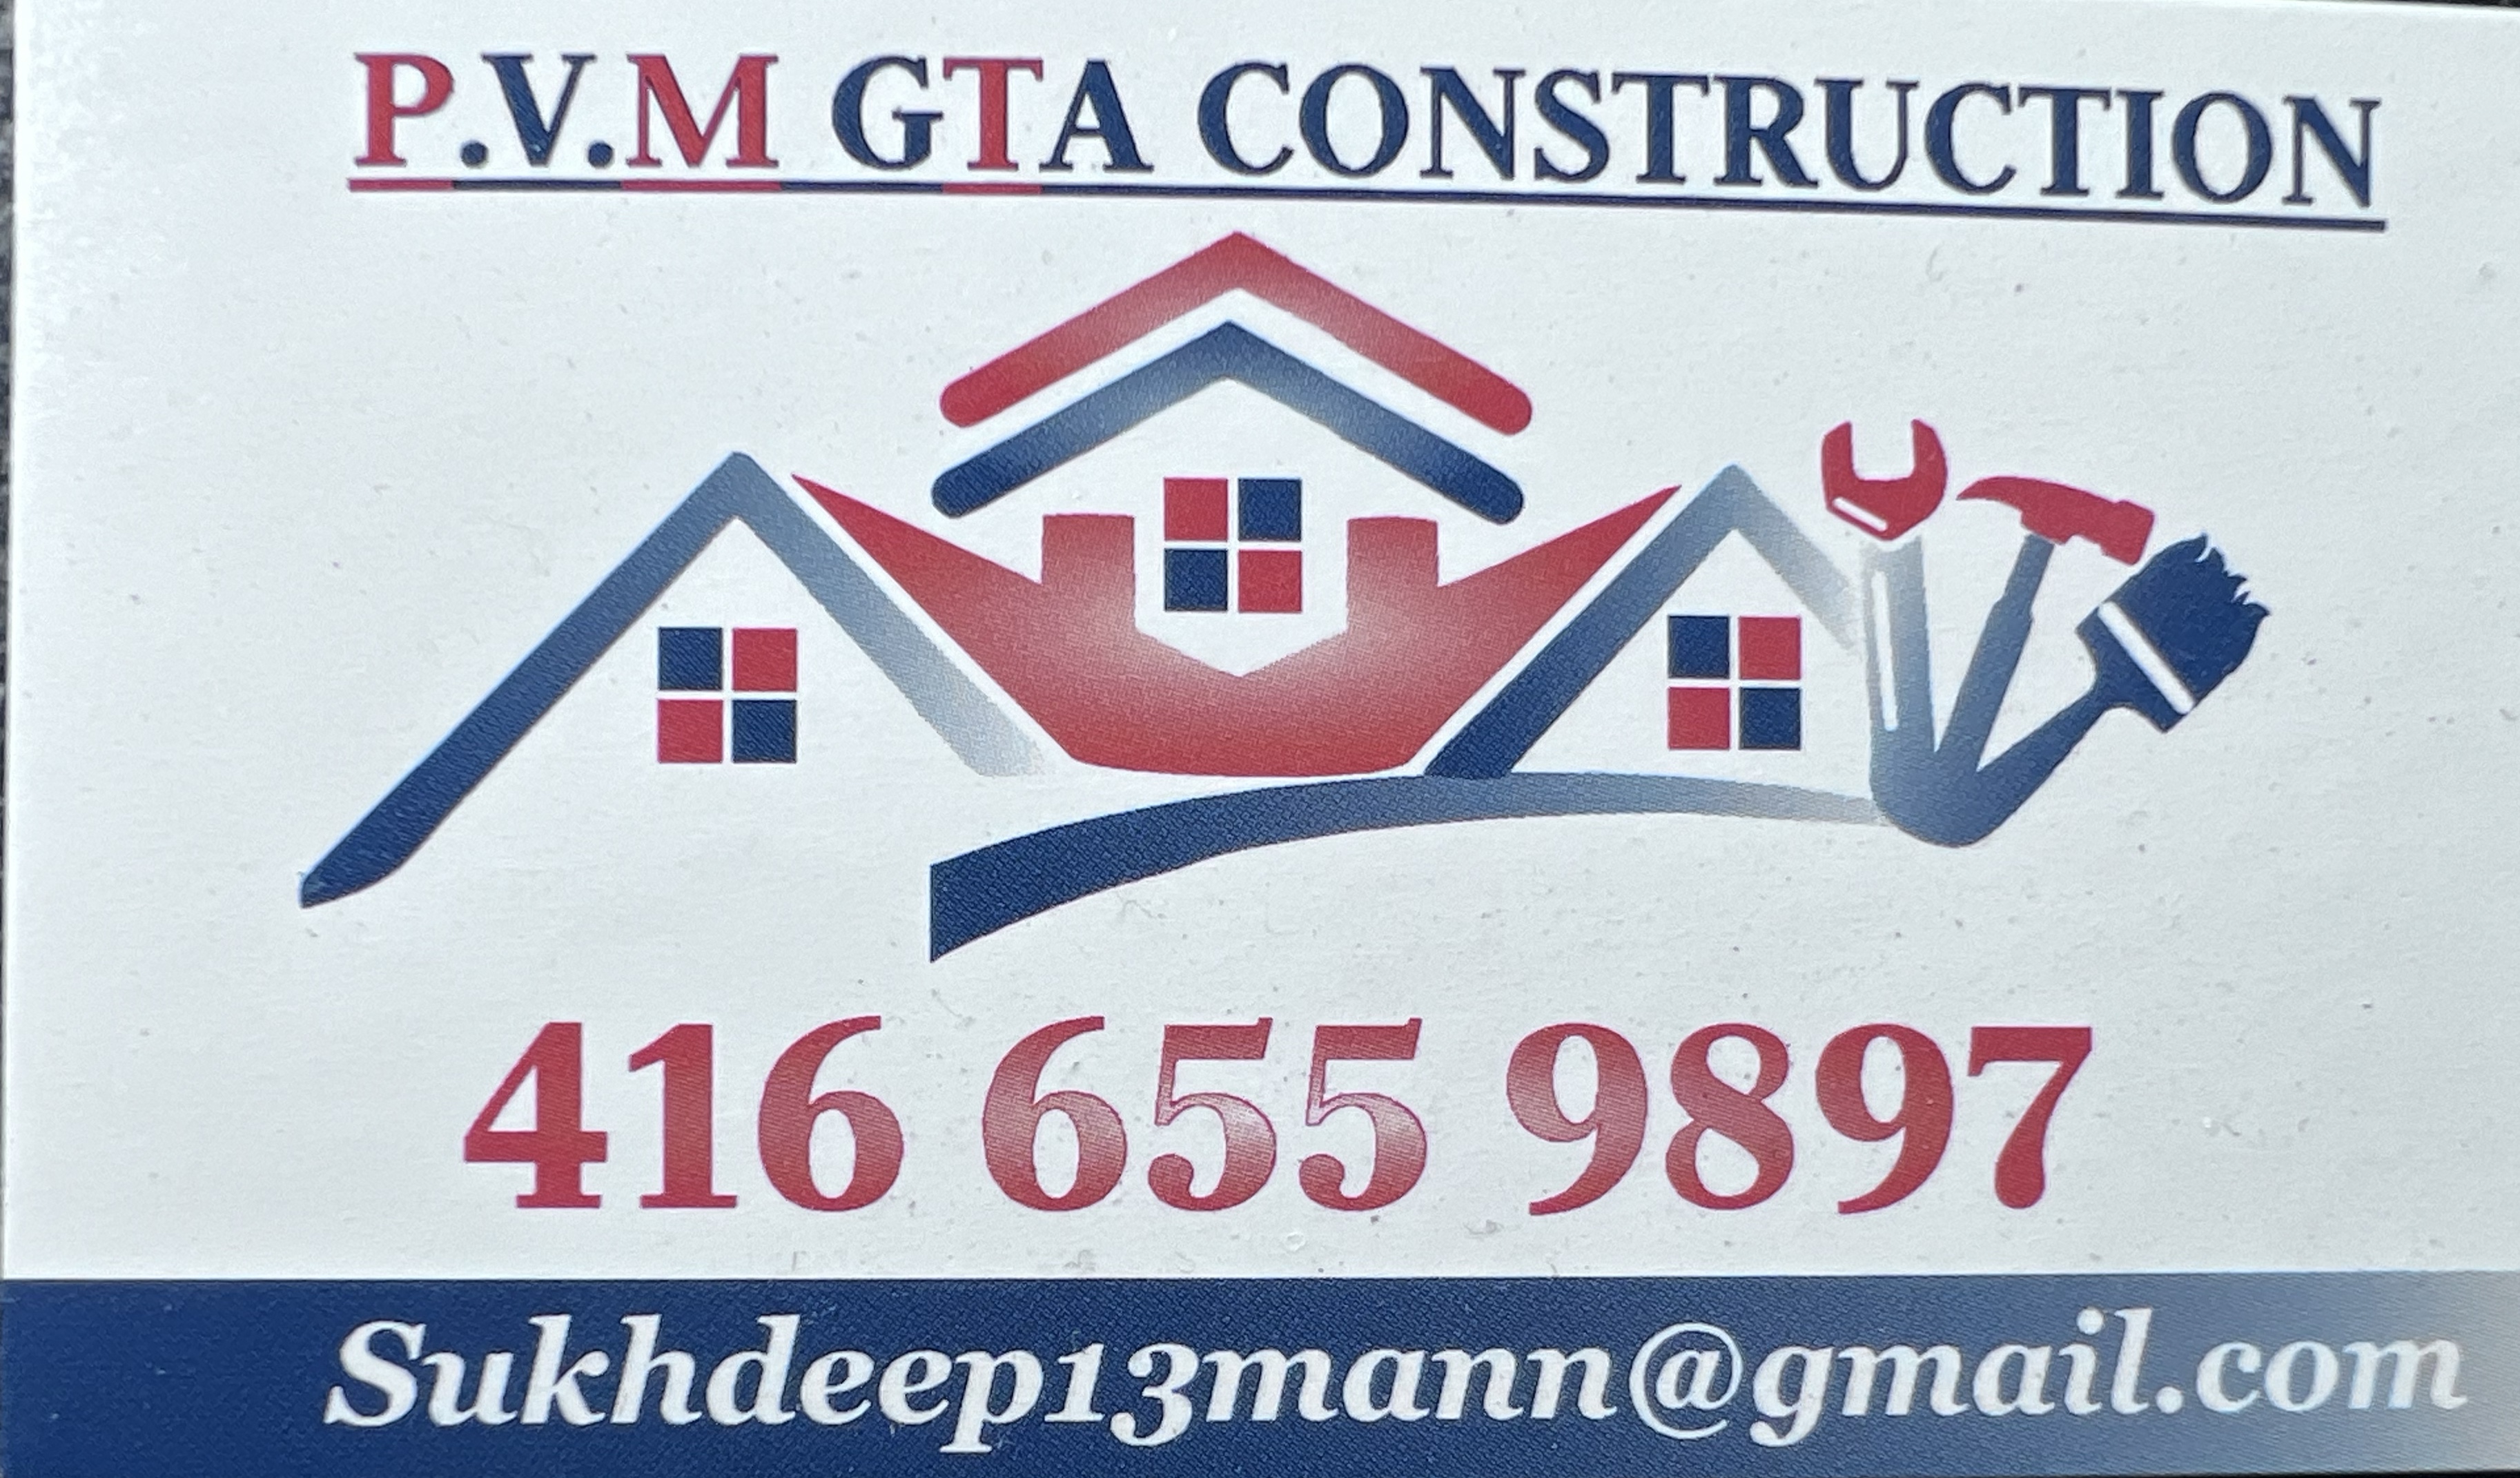 PVM GTA Construction's logo